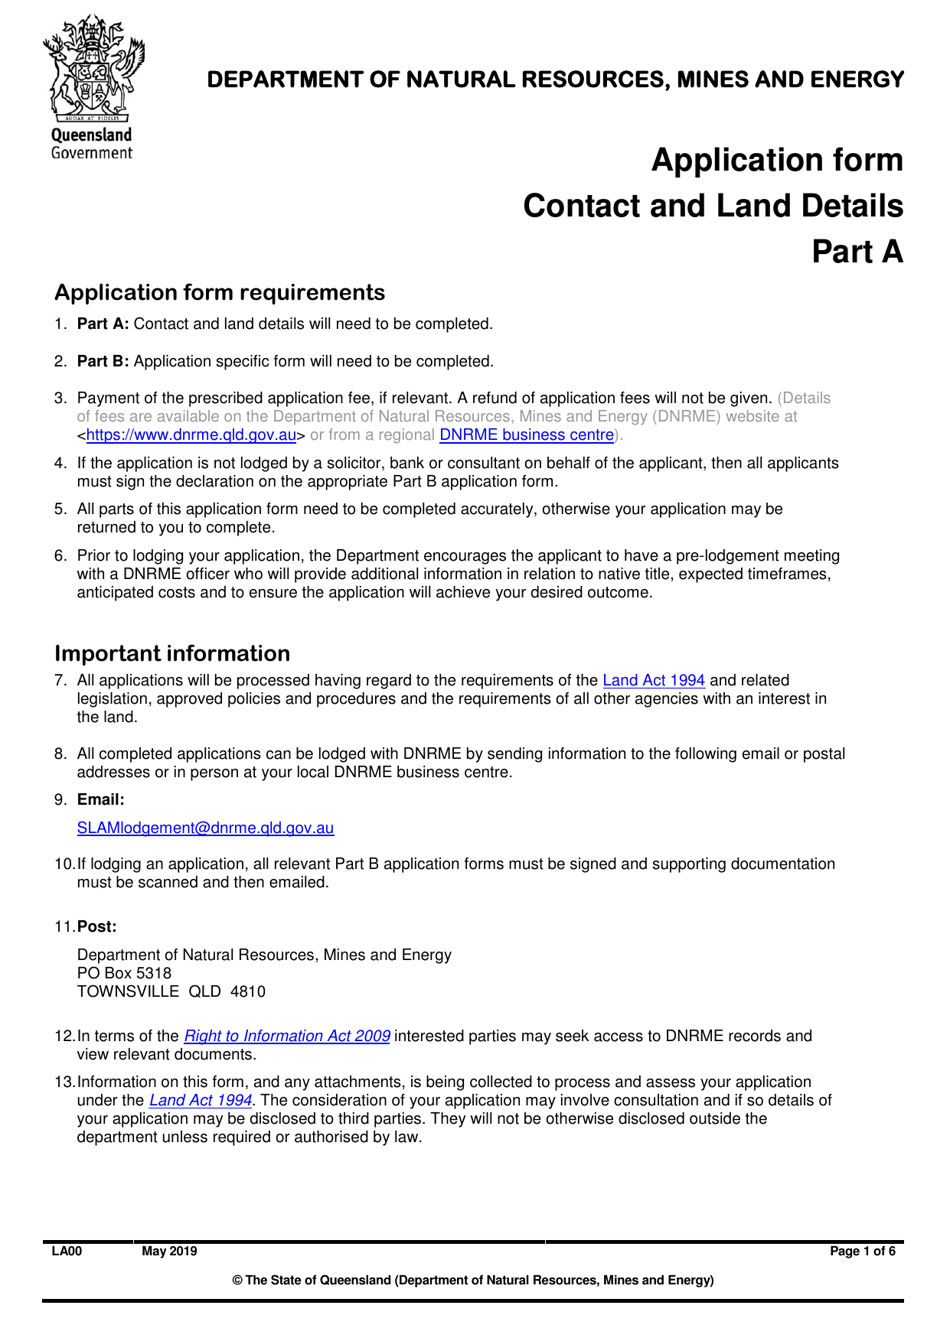 Form LA00 Part A Application Form Contact and Land Details - Queensland, Australia, Page 1